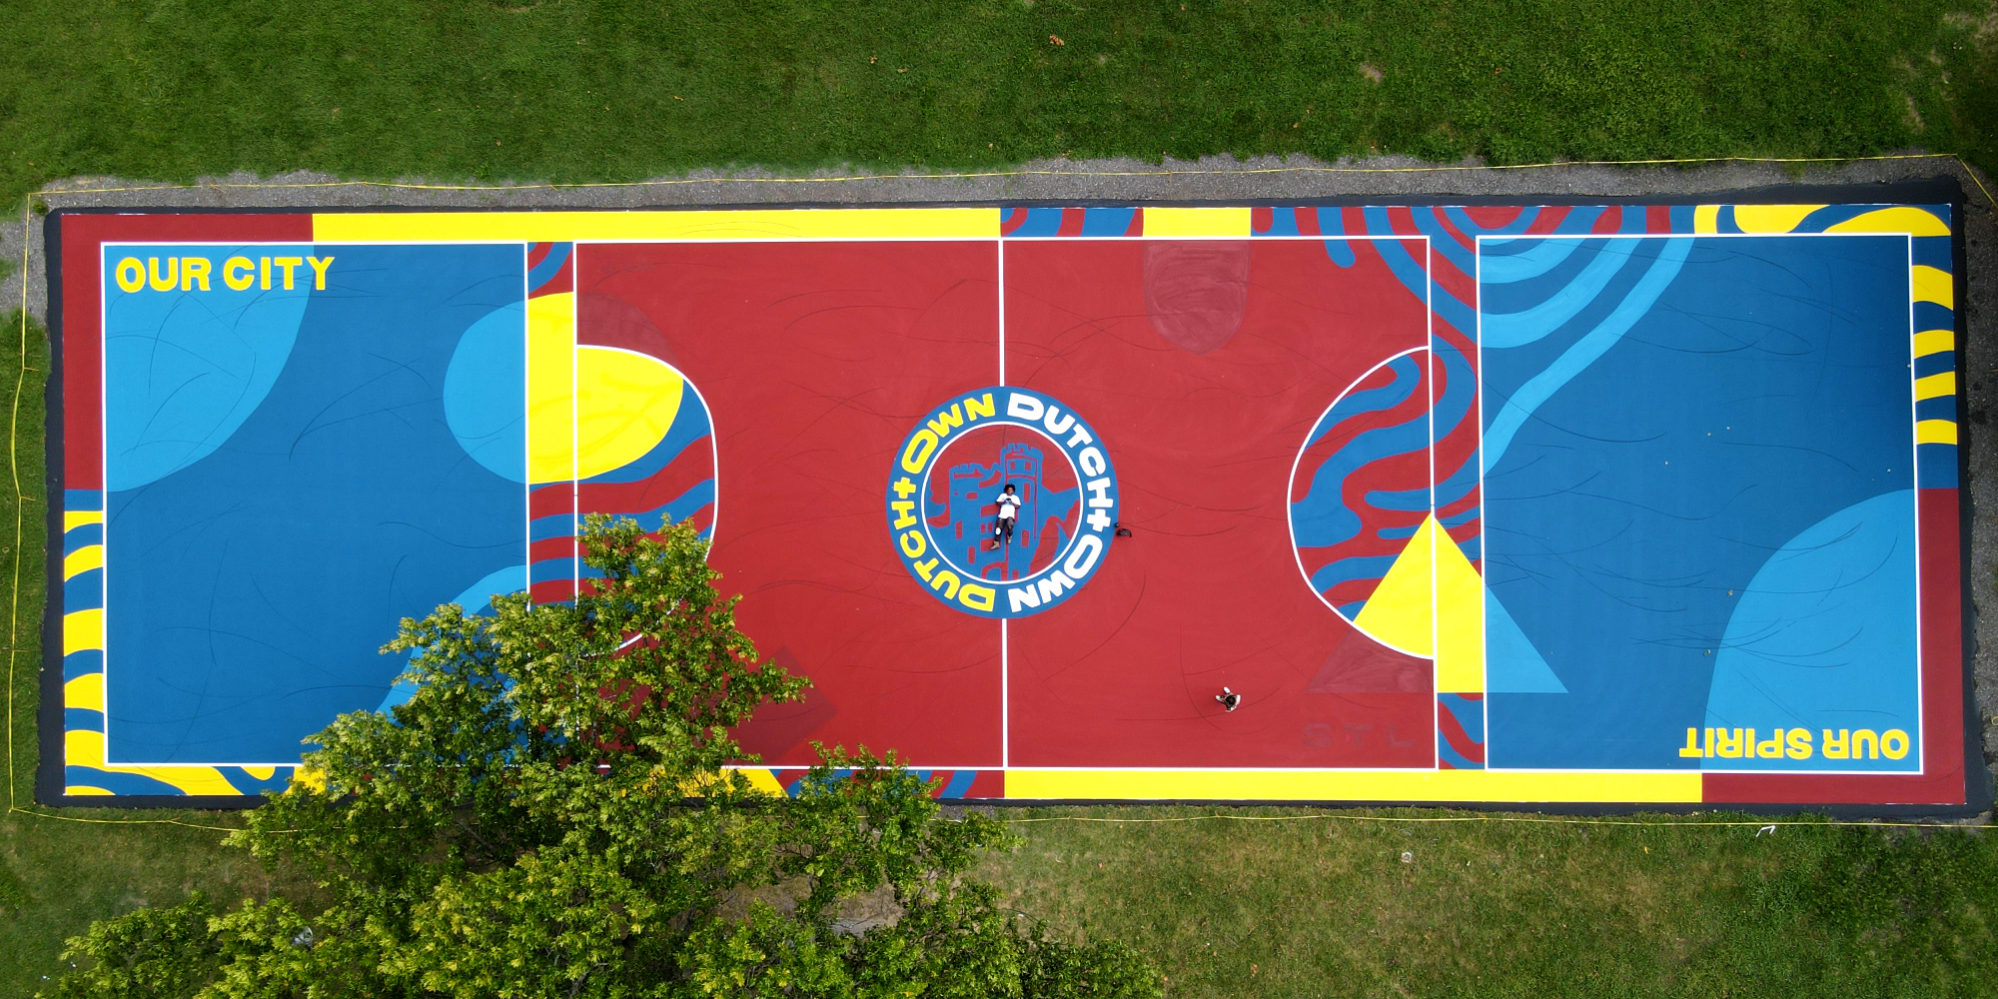 The futsal court in Marquette Park designed by Jayvn Solomon.